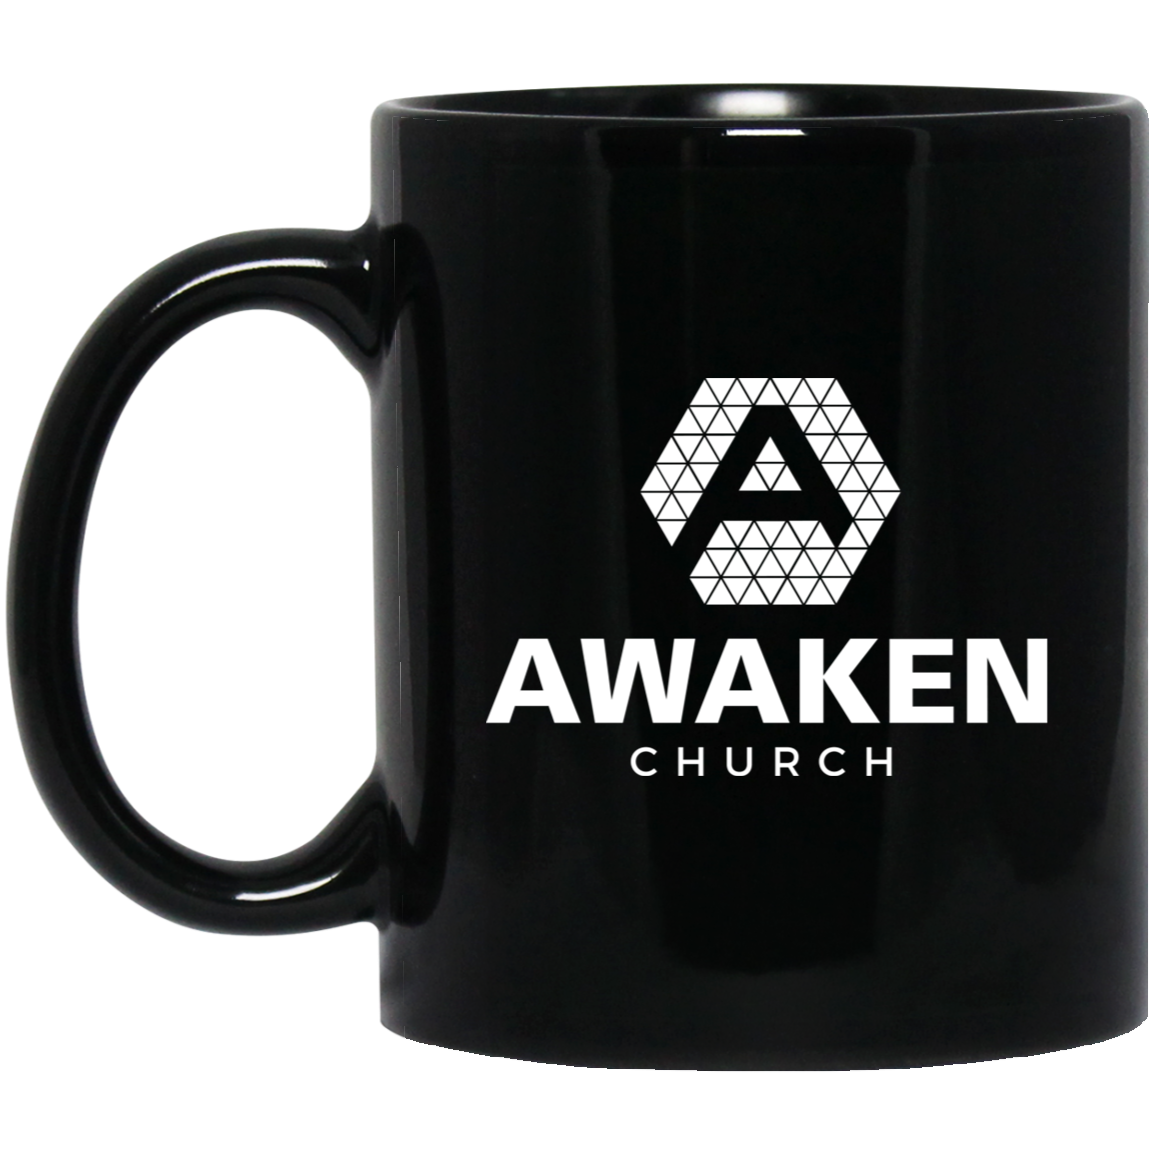 Awaken Church Mugs